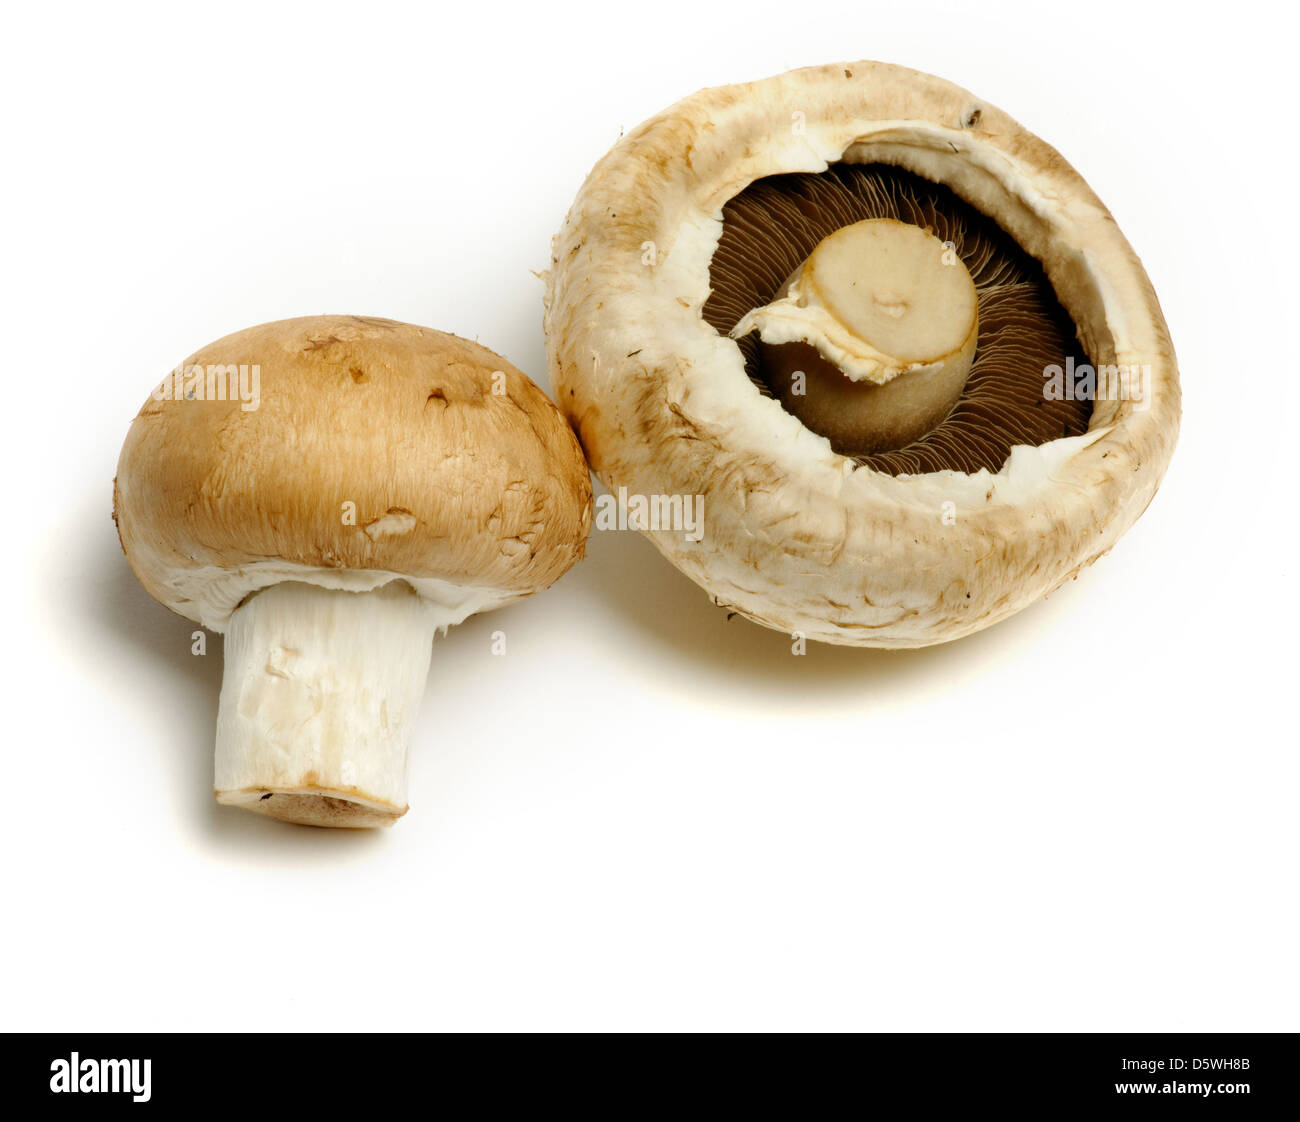 one chestnut and one white mushroom on white background Stock Photo